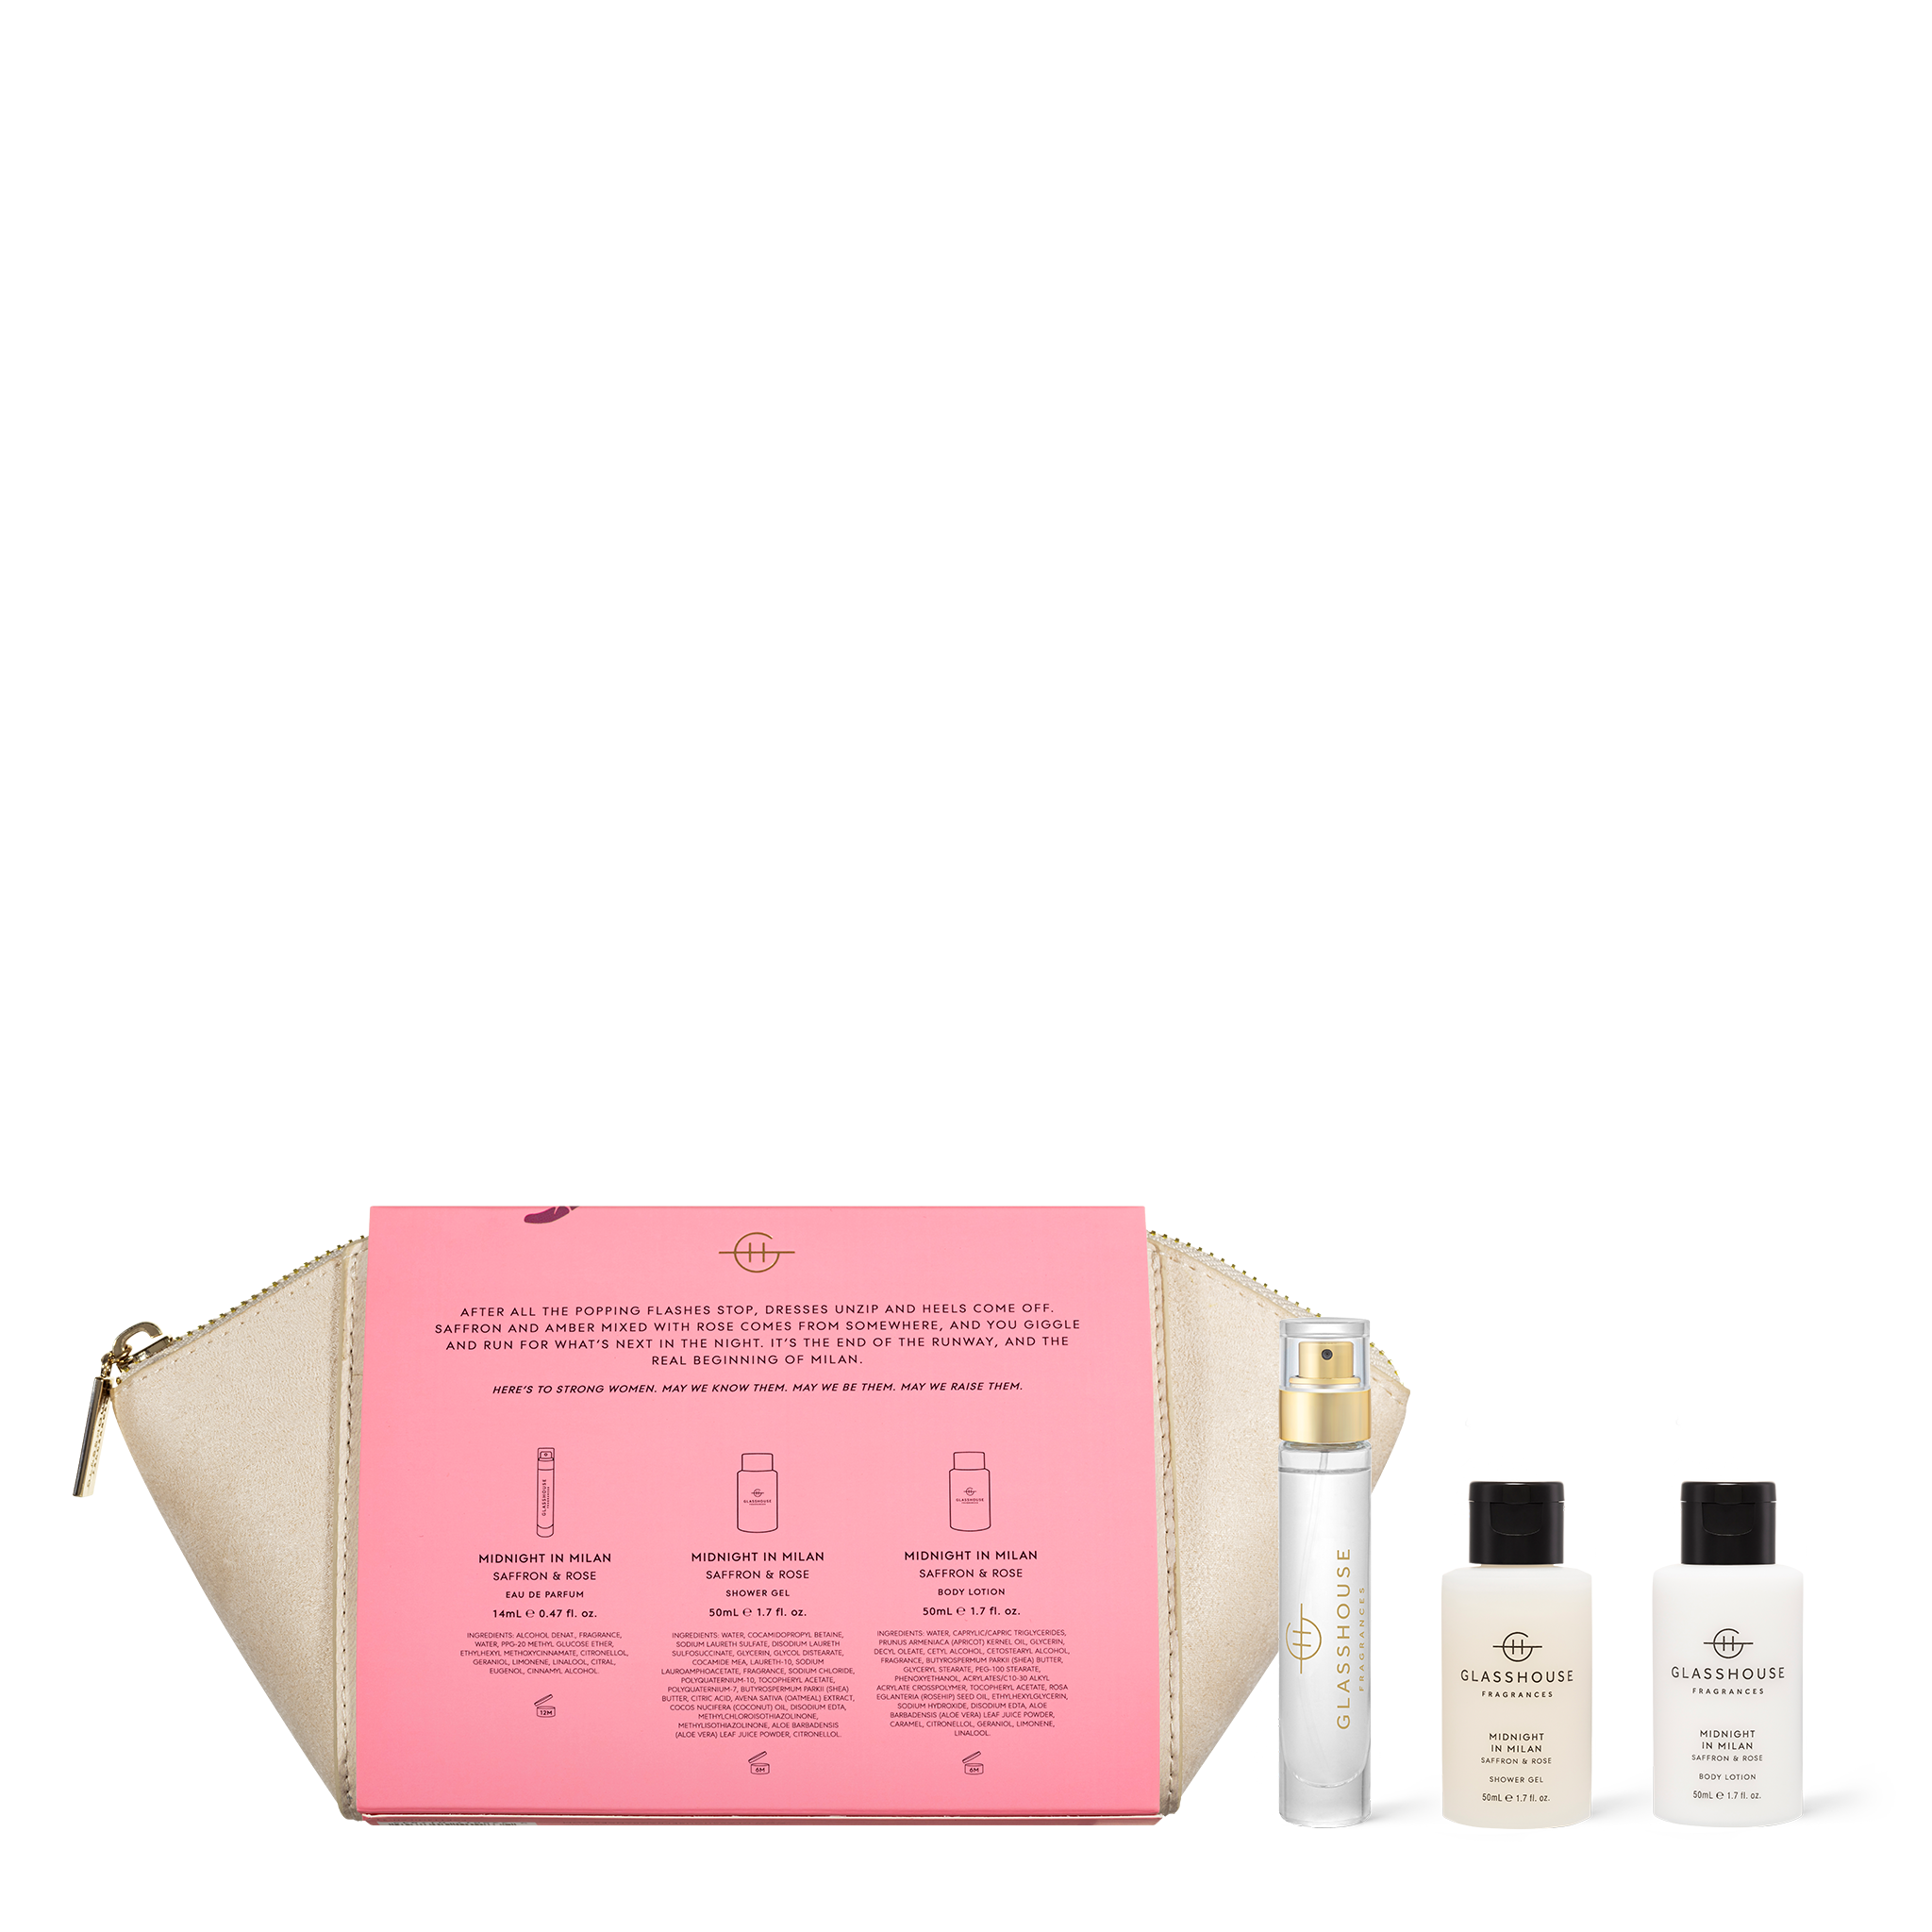 Glasshouse Fragrances Midnight in Milan Saffron and Rose Shower Gel, Body Lotion, Eau de Parfum, travel case - back of product